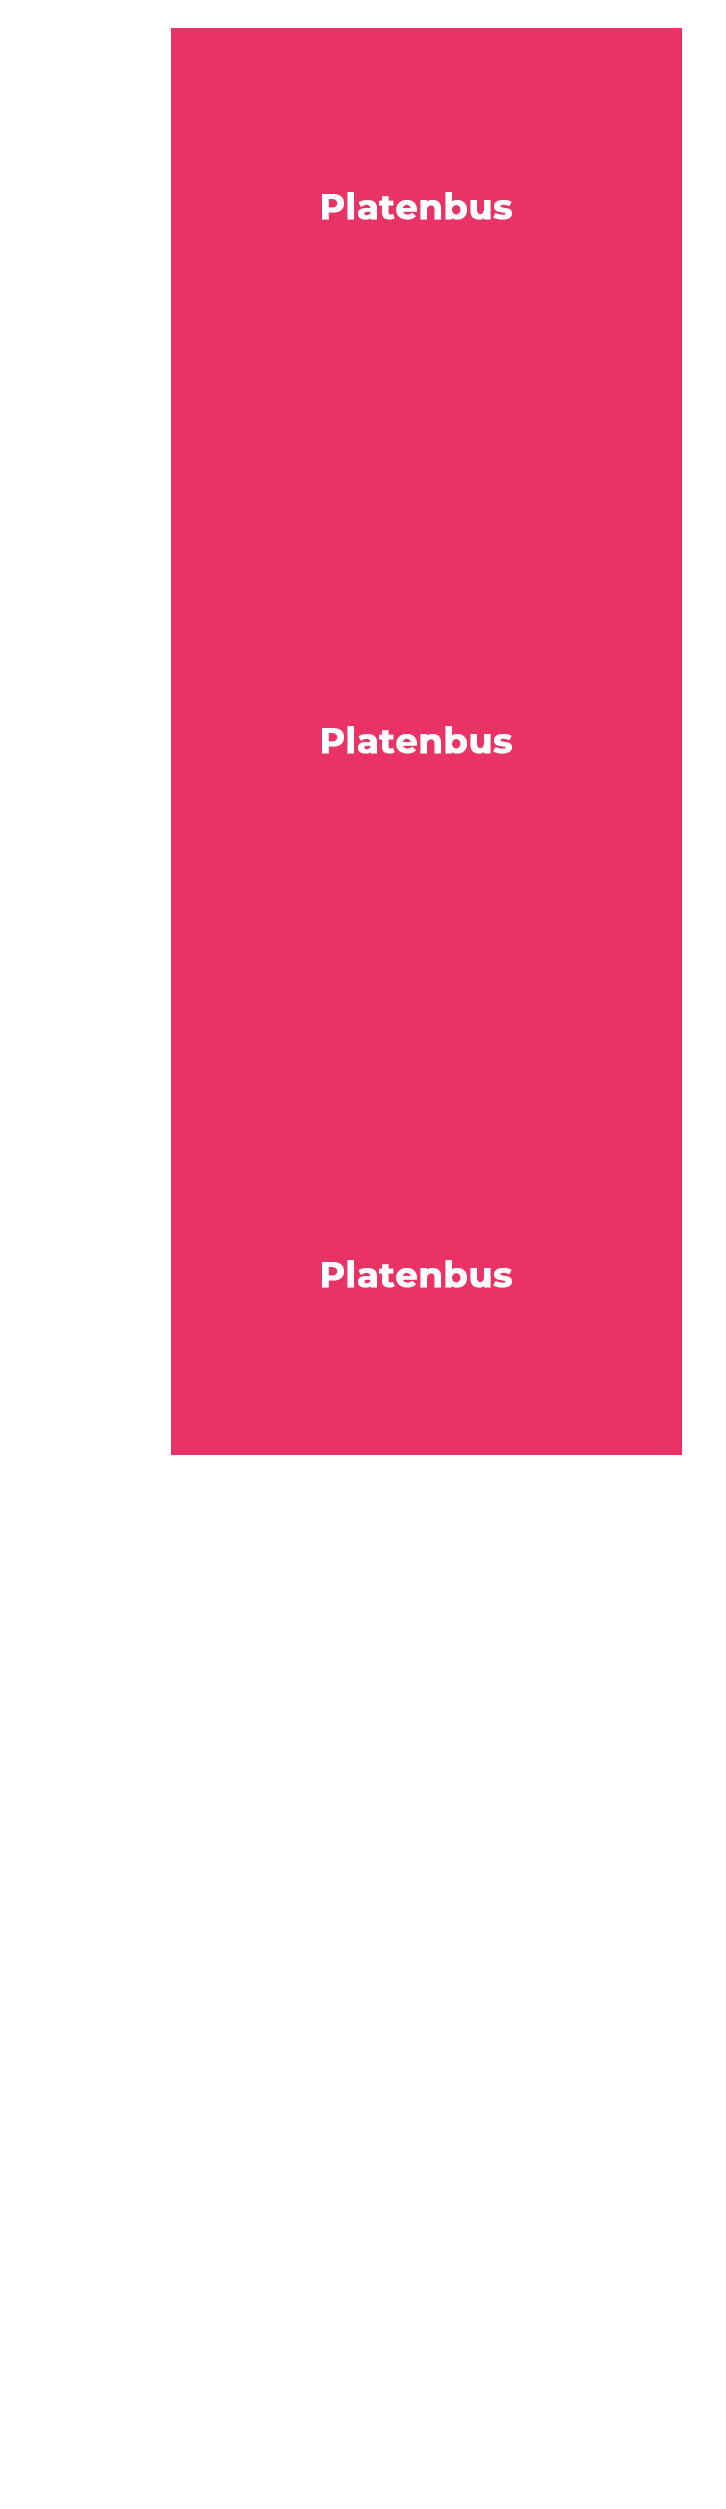 https://nijmeegsebierfeesten.nl/wp-content/uploads/2020/01/2020-muziekprogramma-zondag-podium-2.png